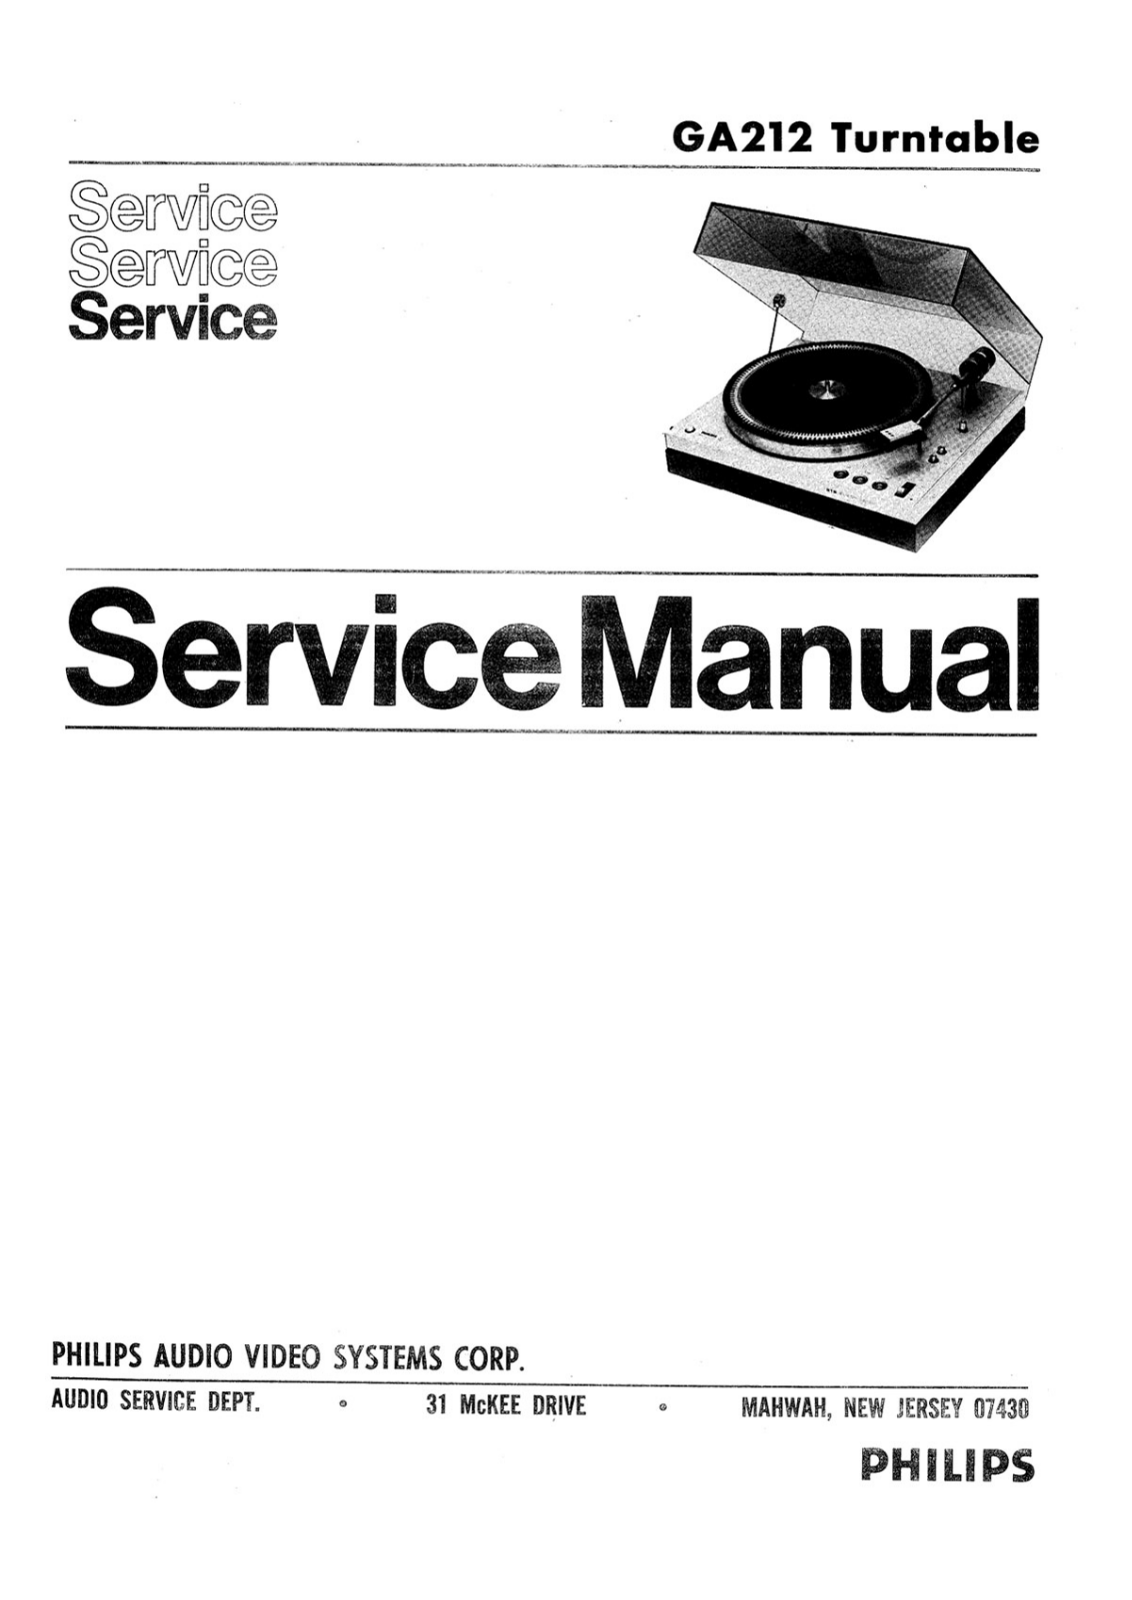 Philips 22-GA-212 Service Manual